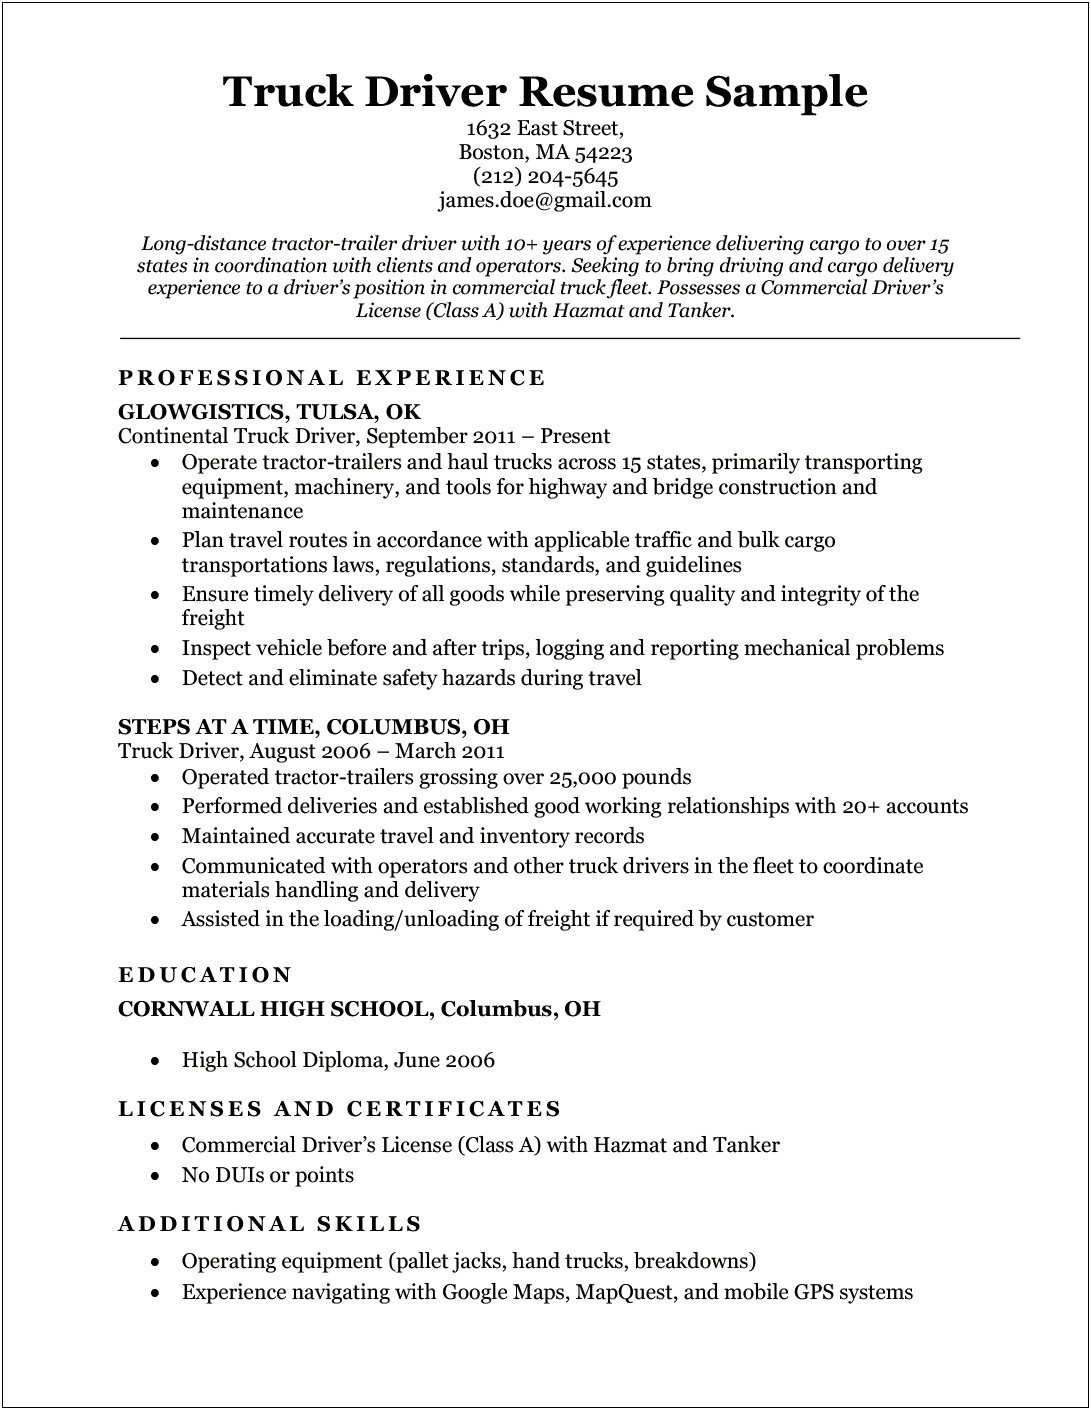 Resume Job Description For Personal Driver